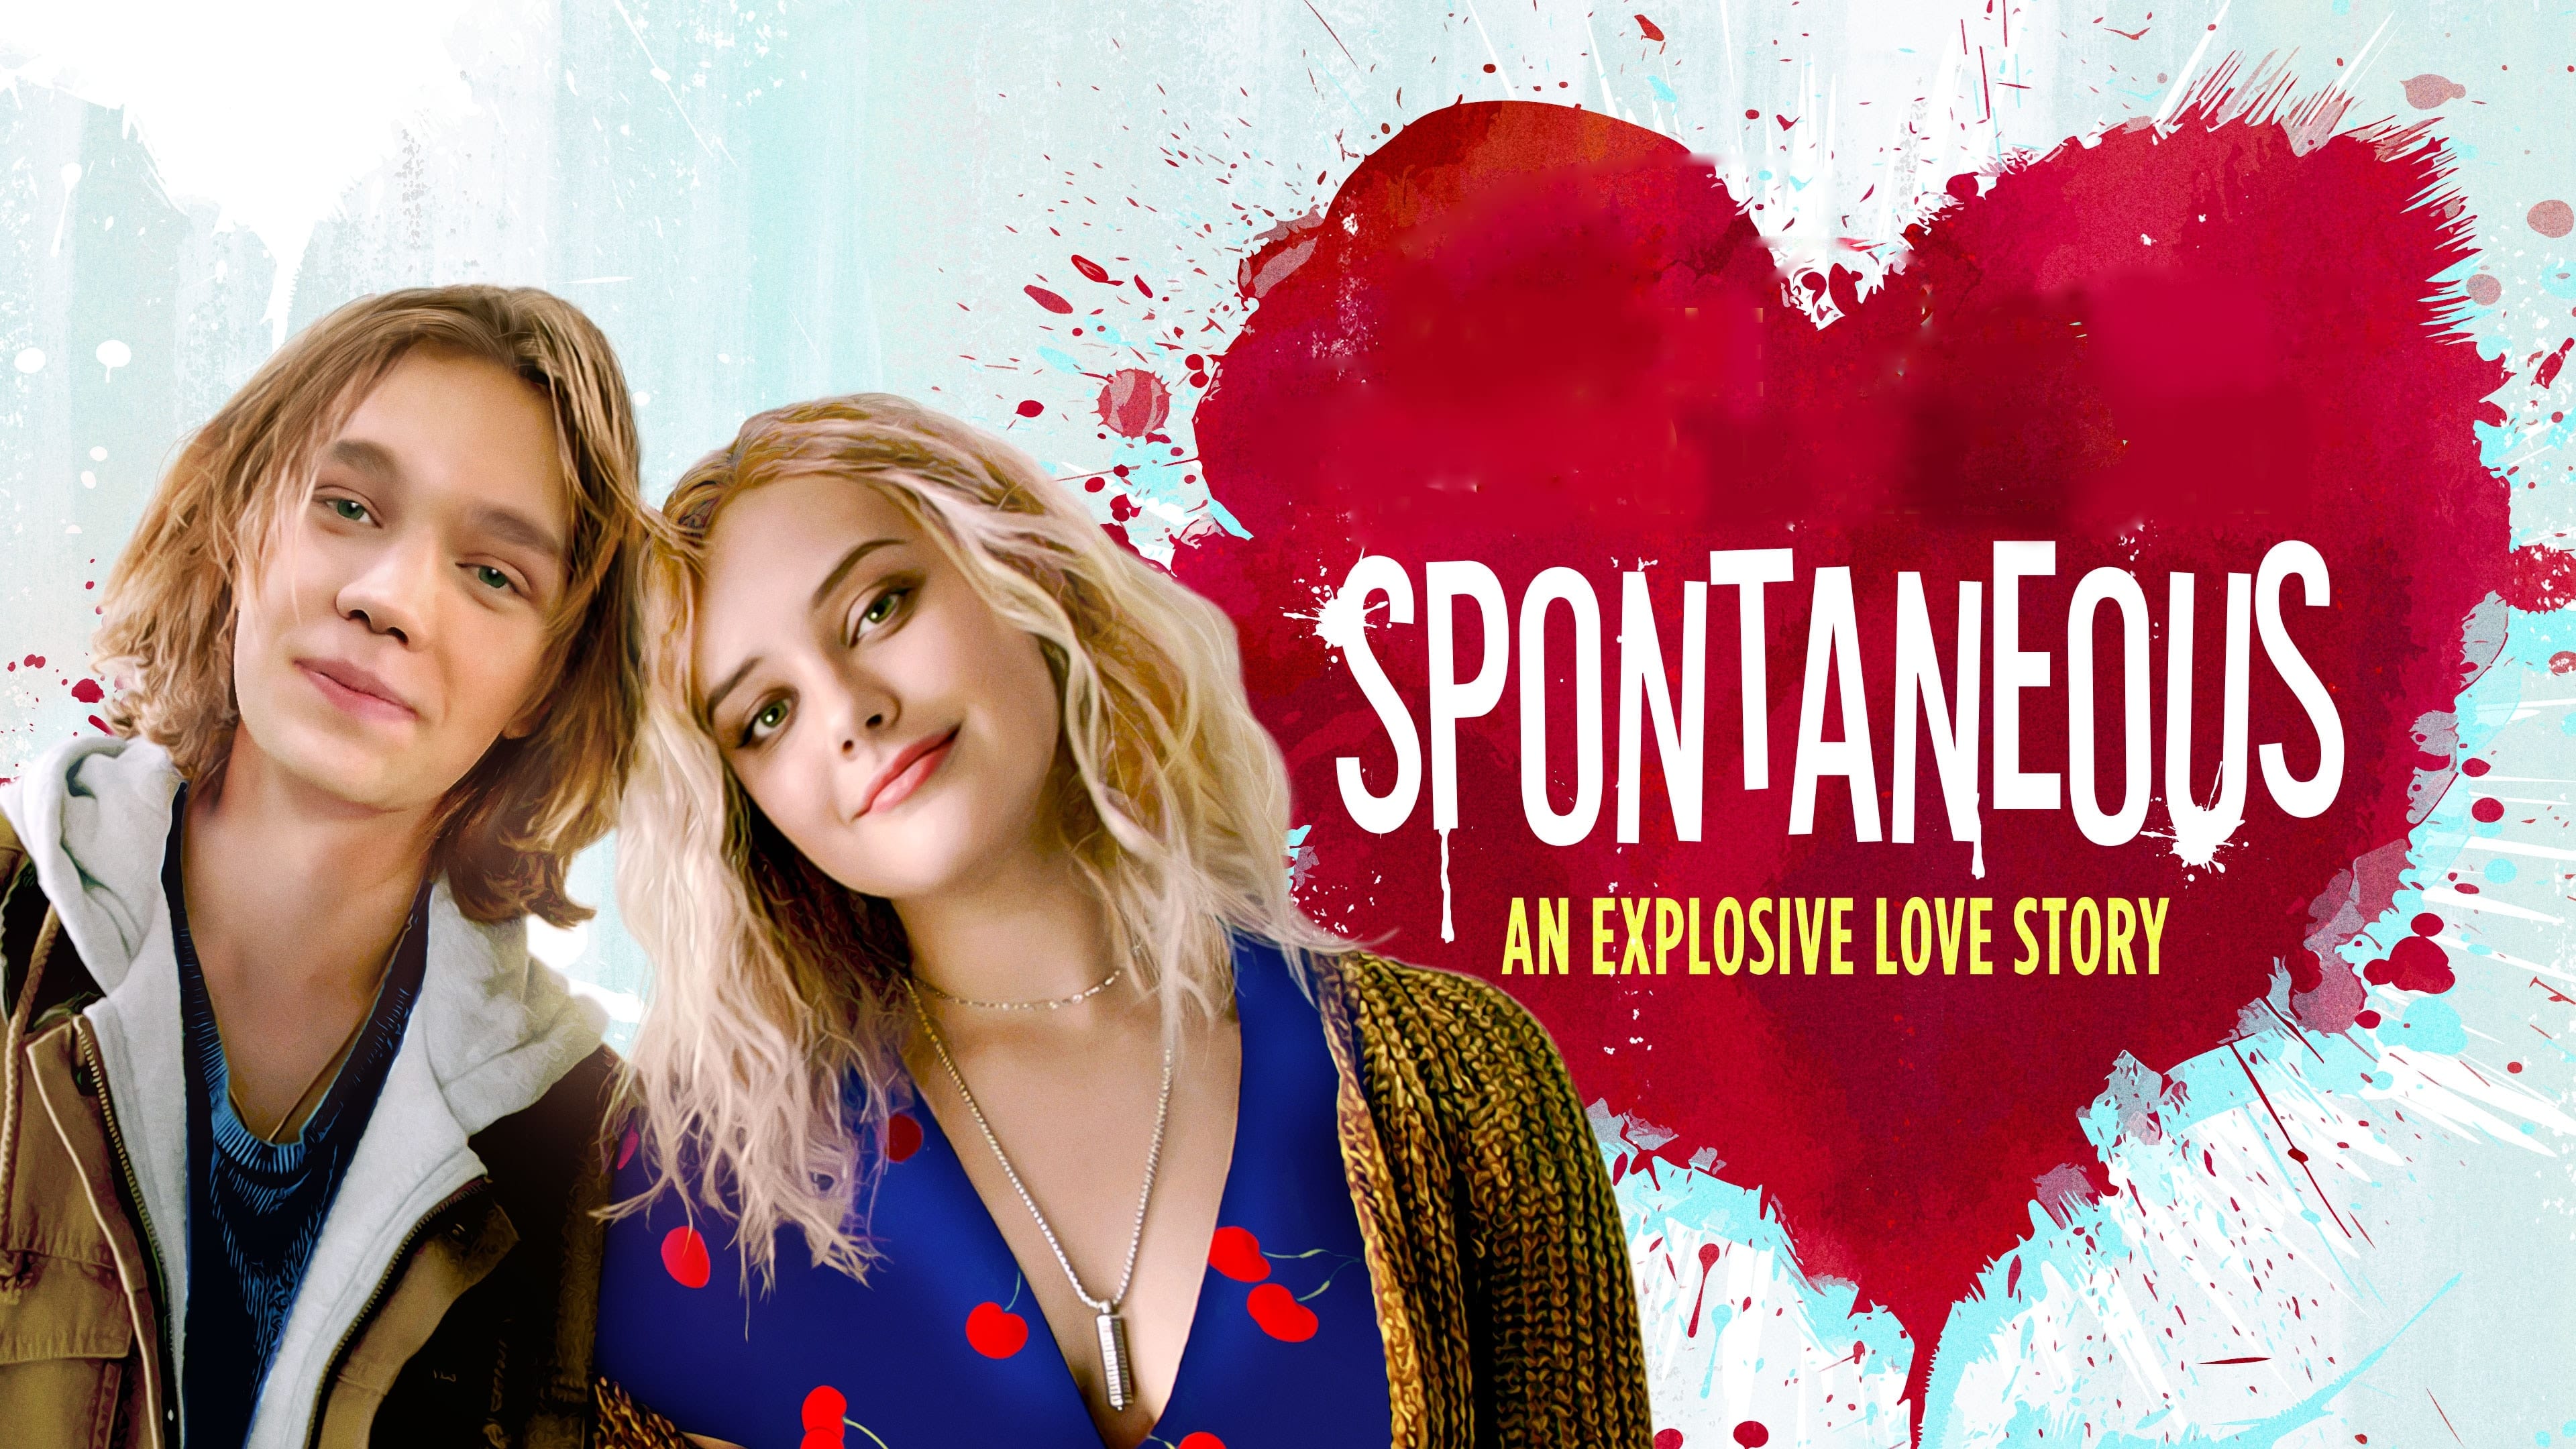 Spontaneous - Una storia d’amore esplosiva (2020)